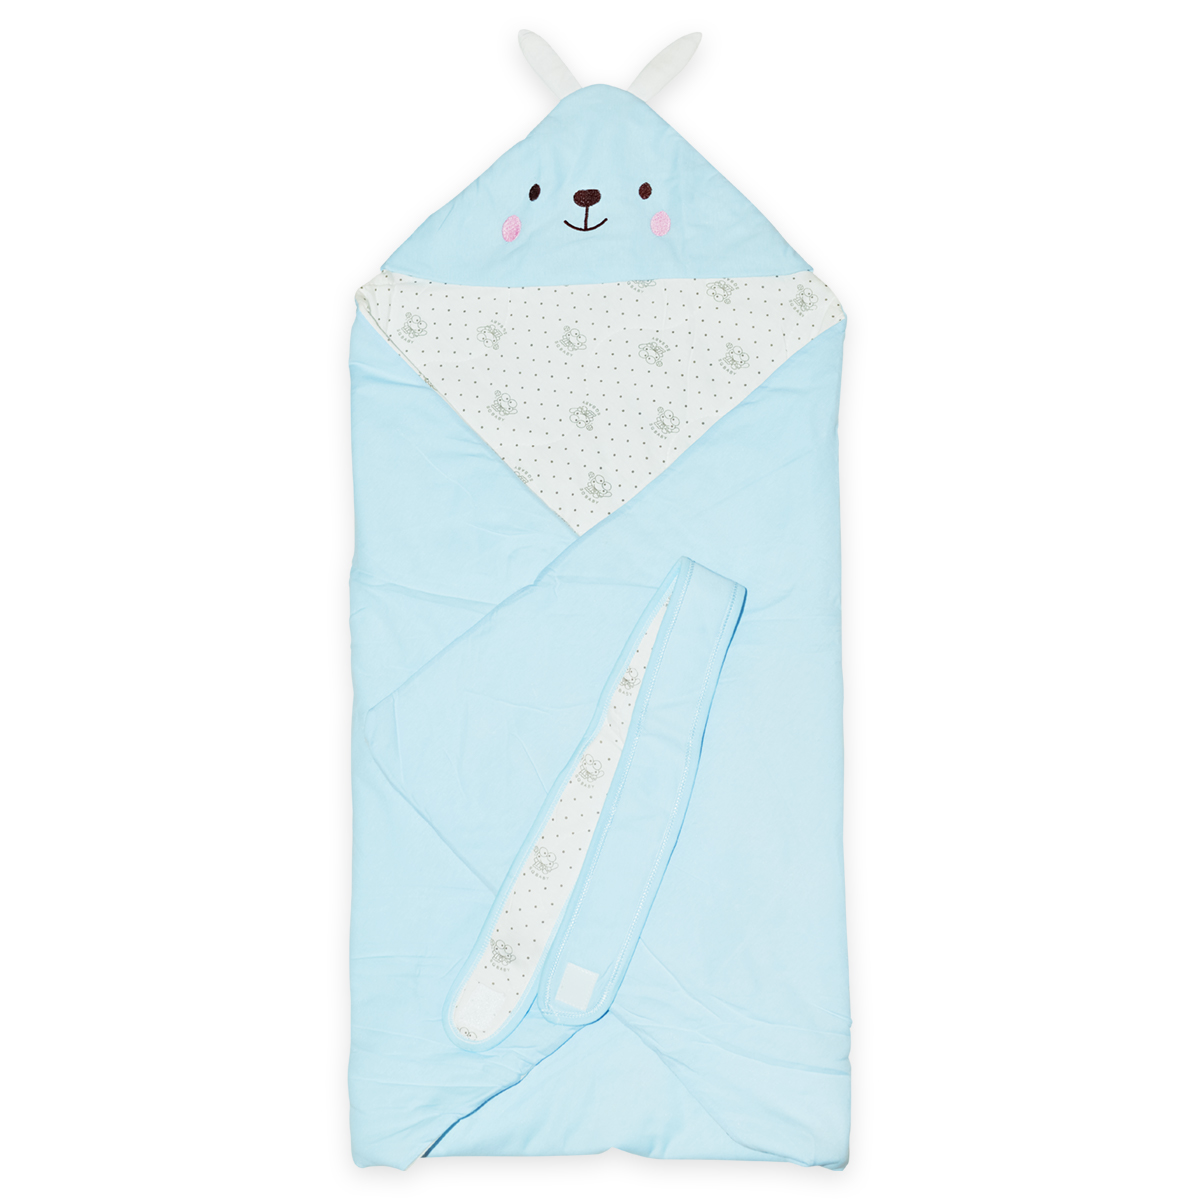 Одеяло-конверт Baby Fox Зайчик, весеннее, цвет голубой, 90х90 см последний маленький голубой конверт бумгор джонсон